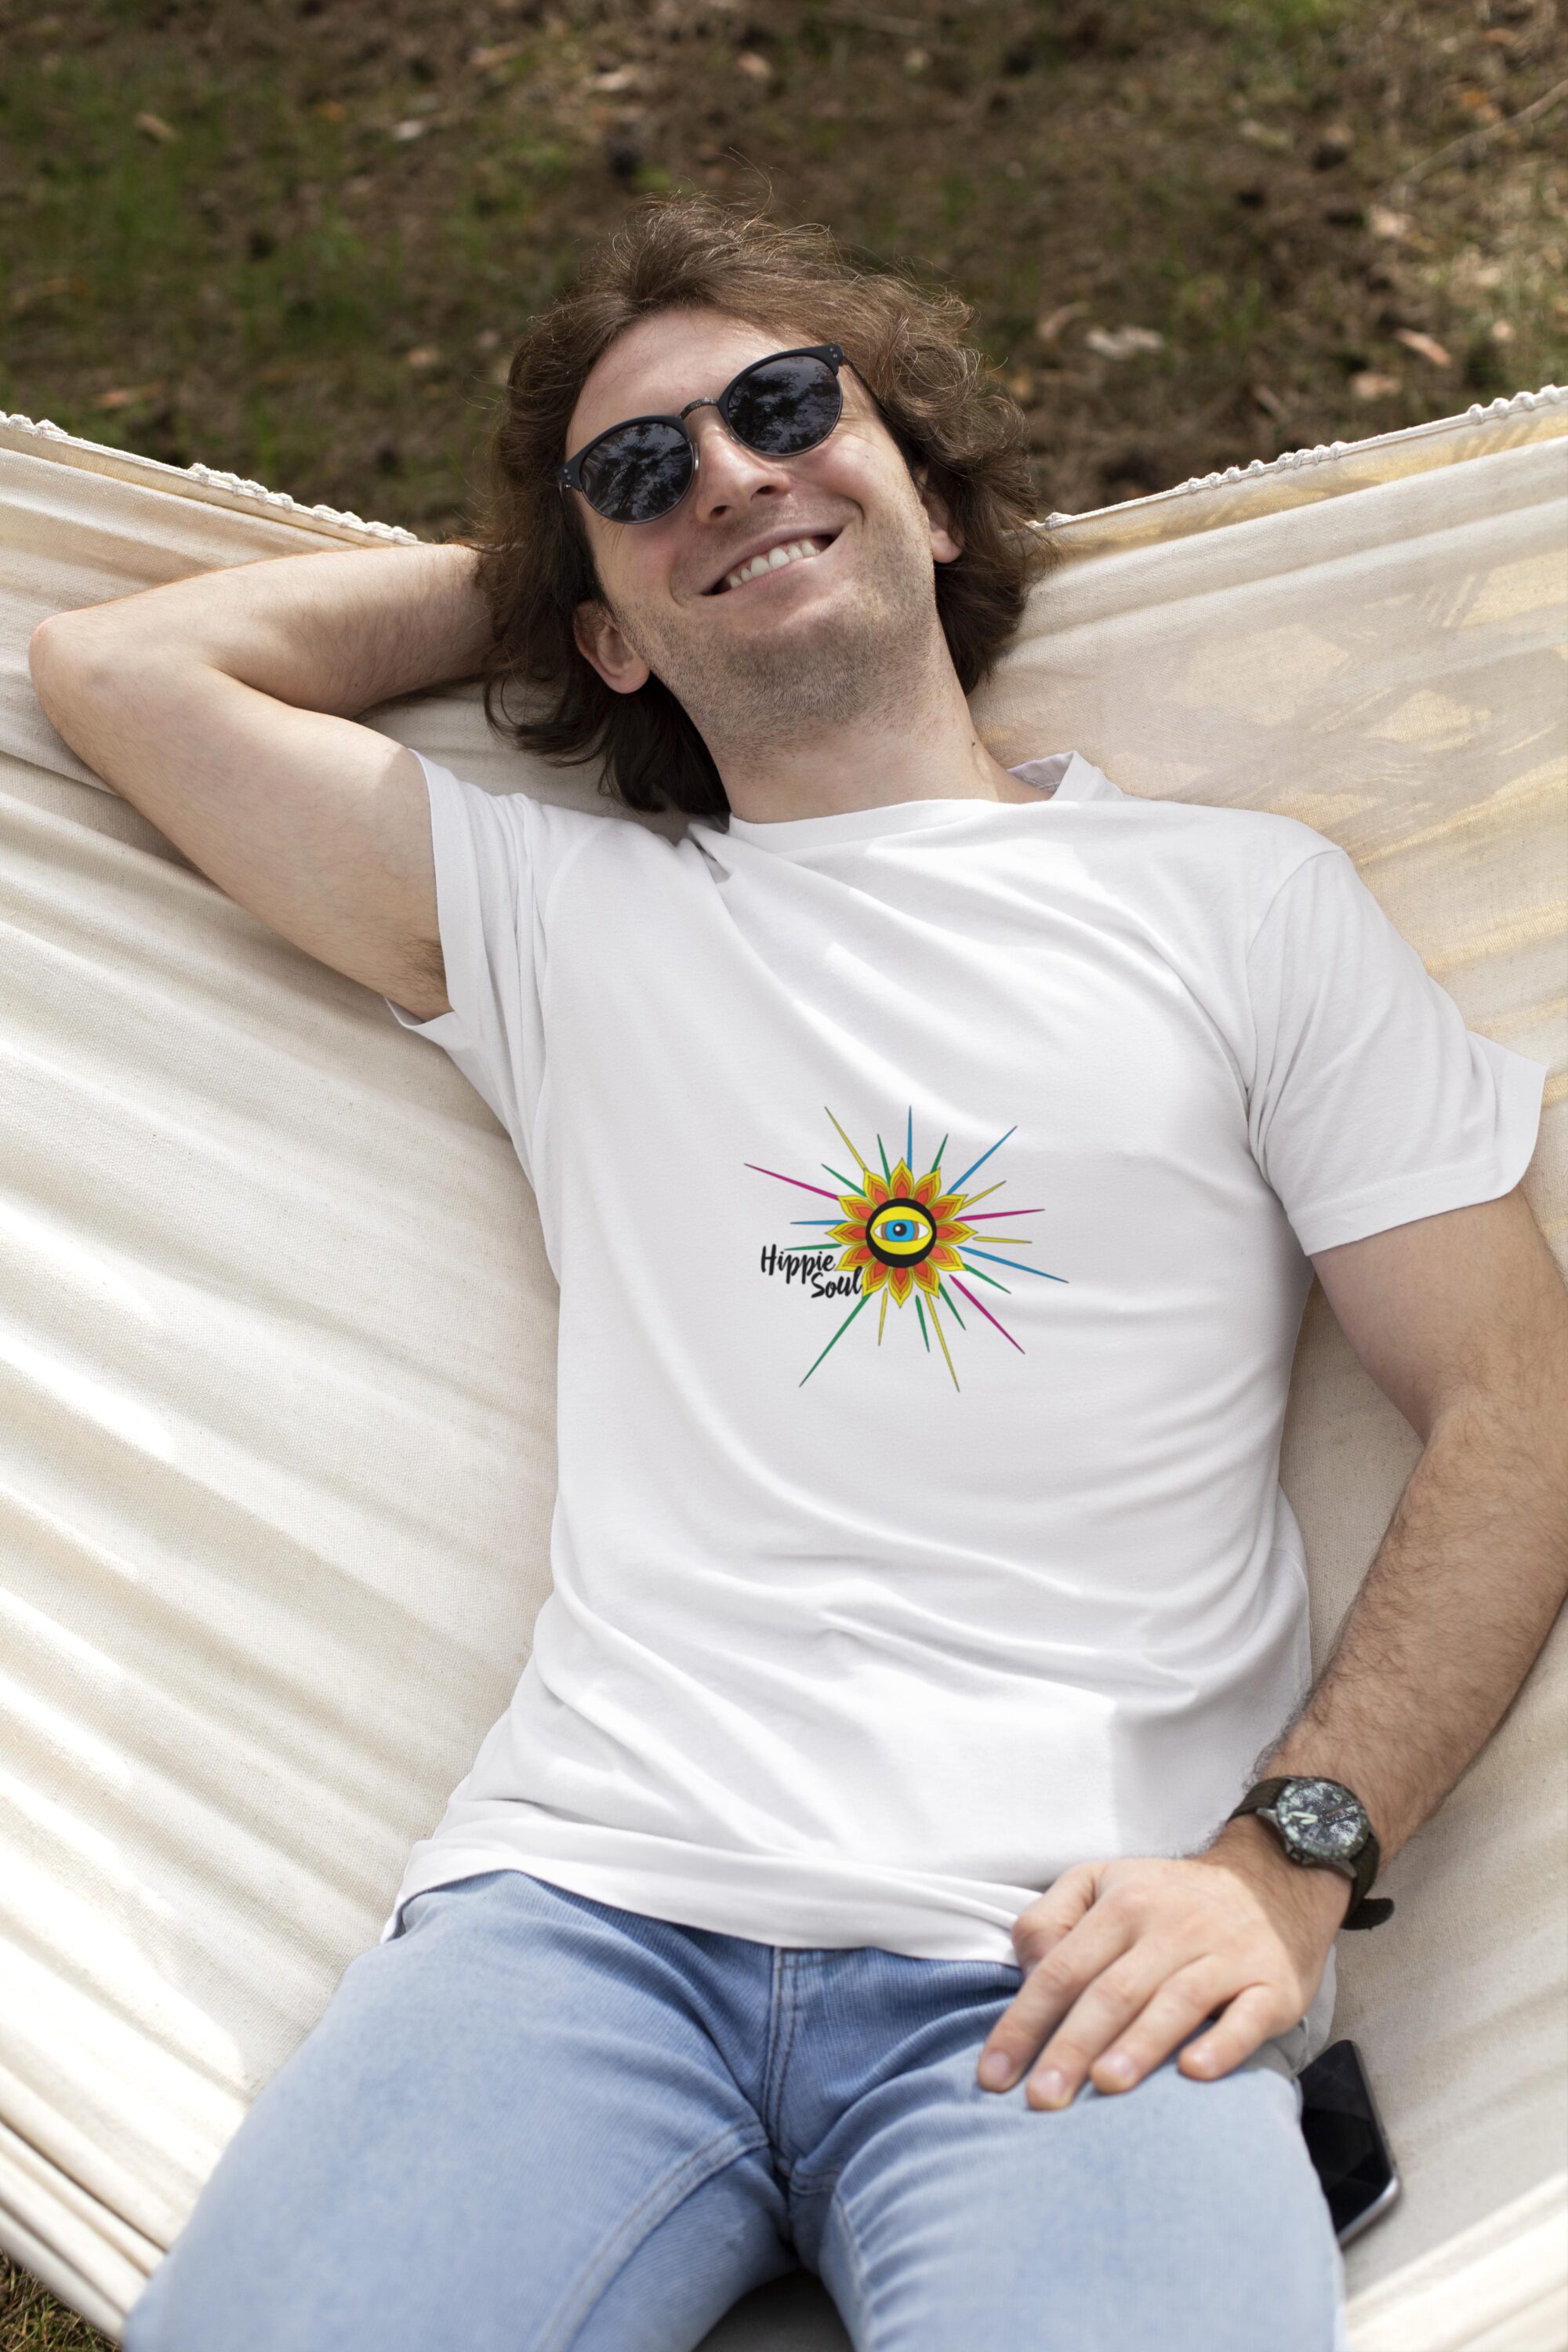 Hippie t-shirt design in minimalistic style.